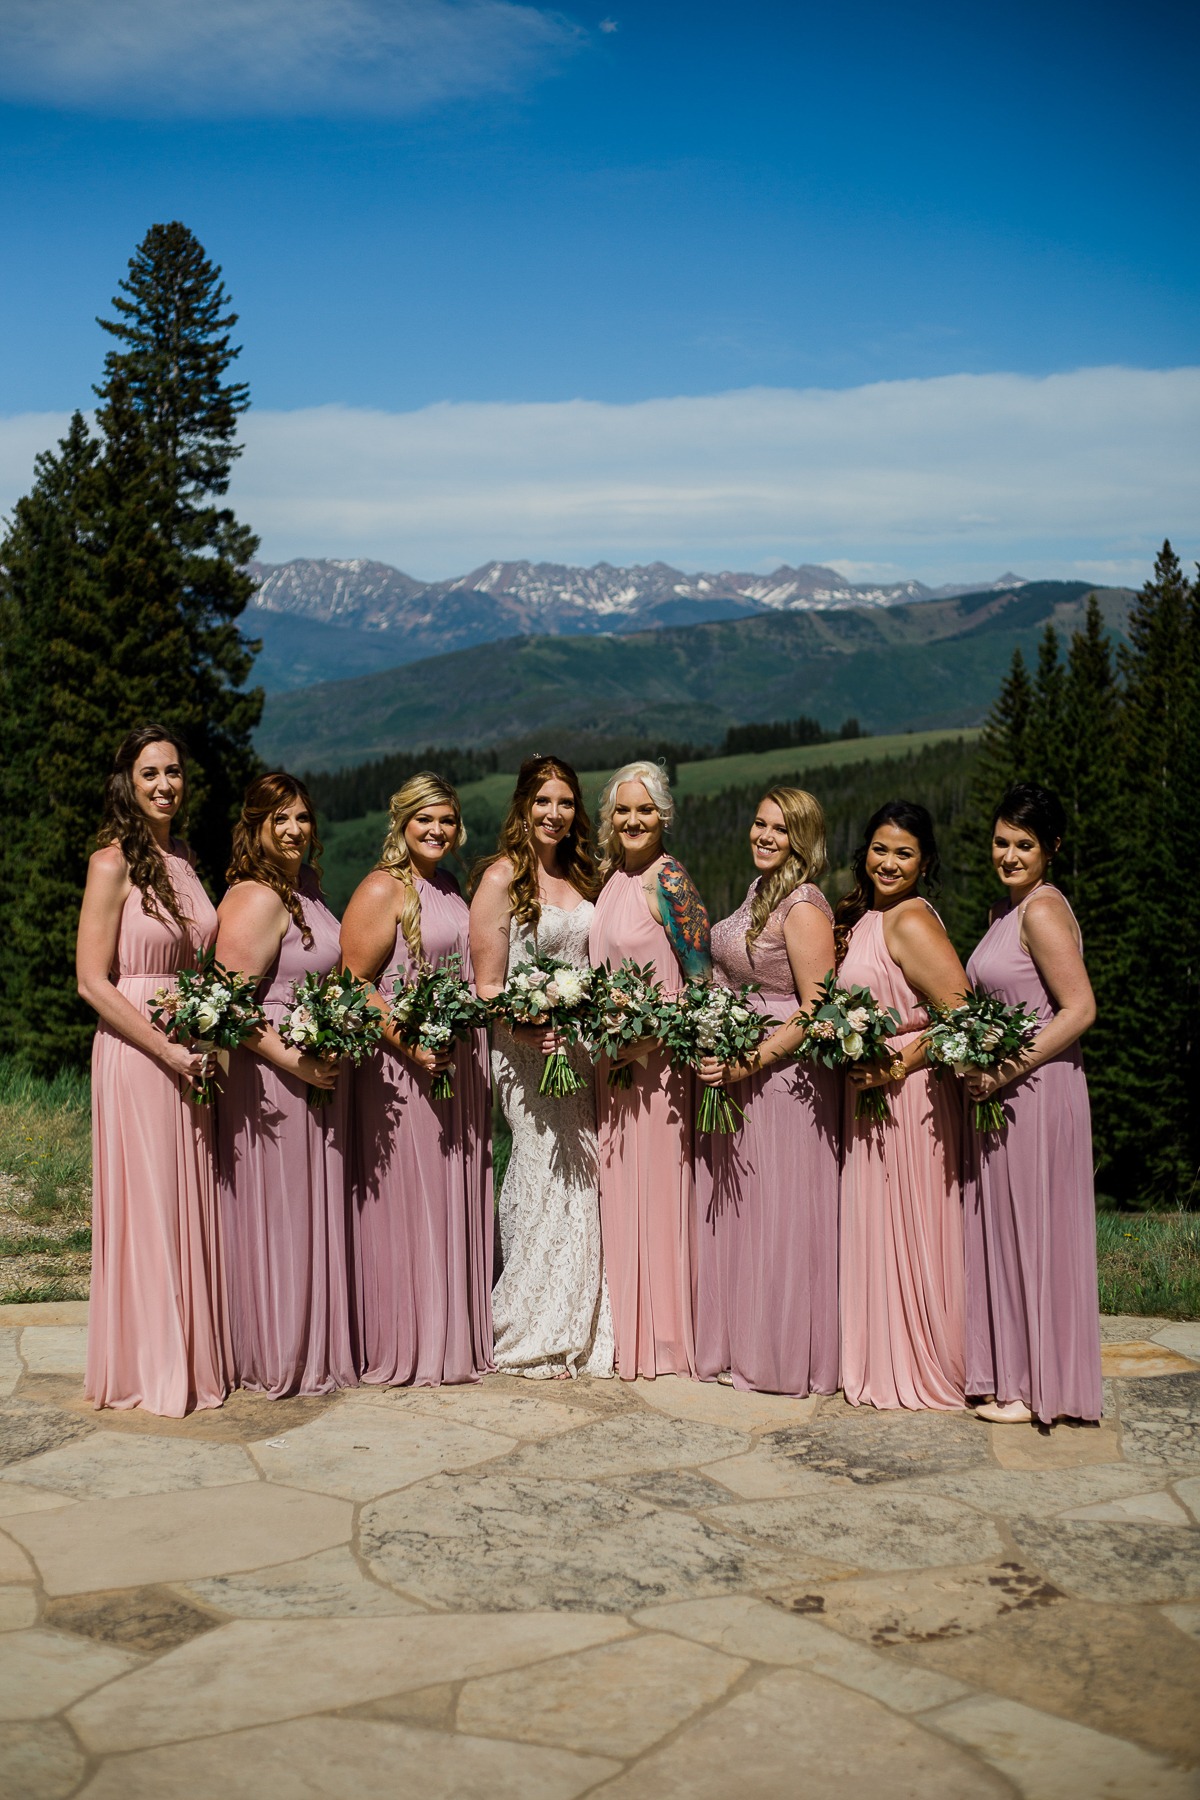 Bridesmaids in blush dresses